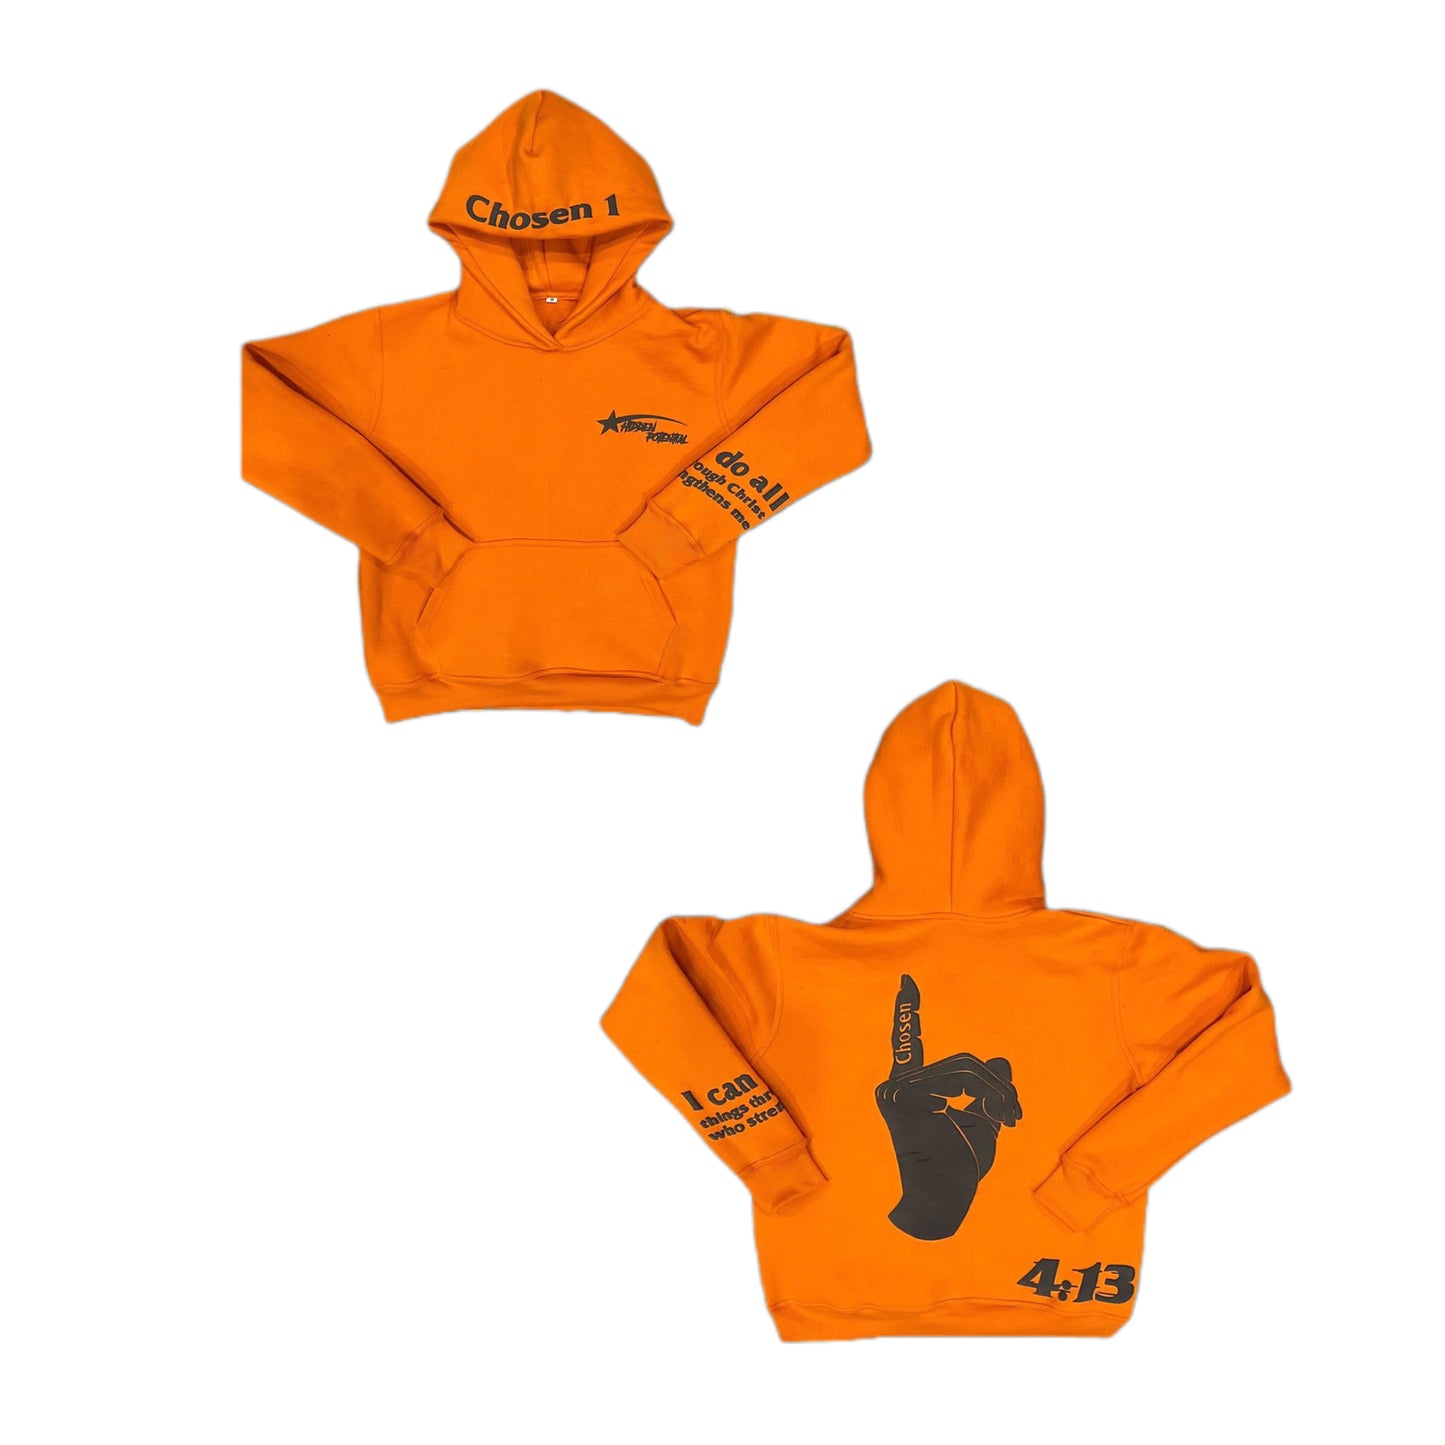 Orange & Black "Chosen 1" pullover